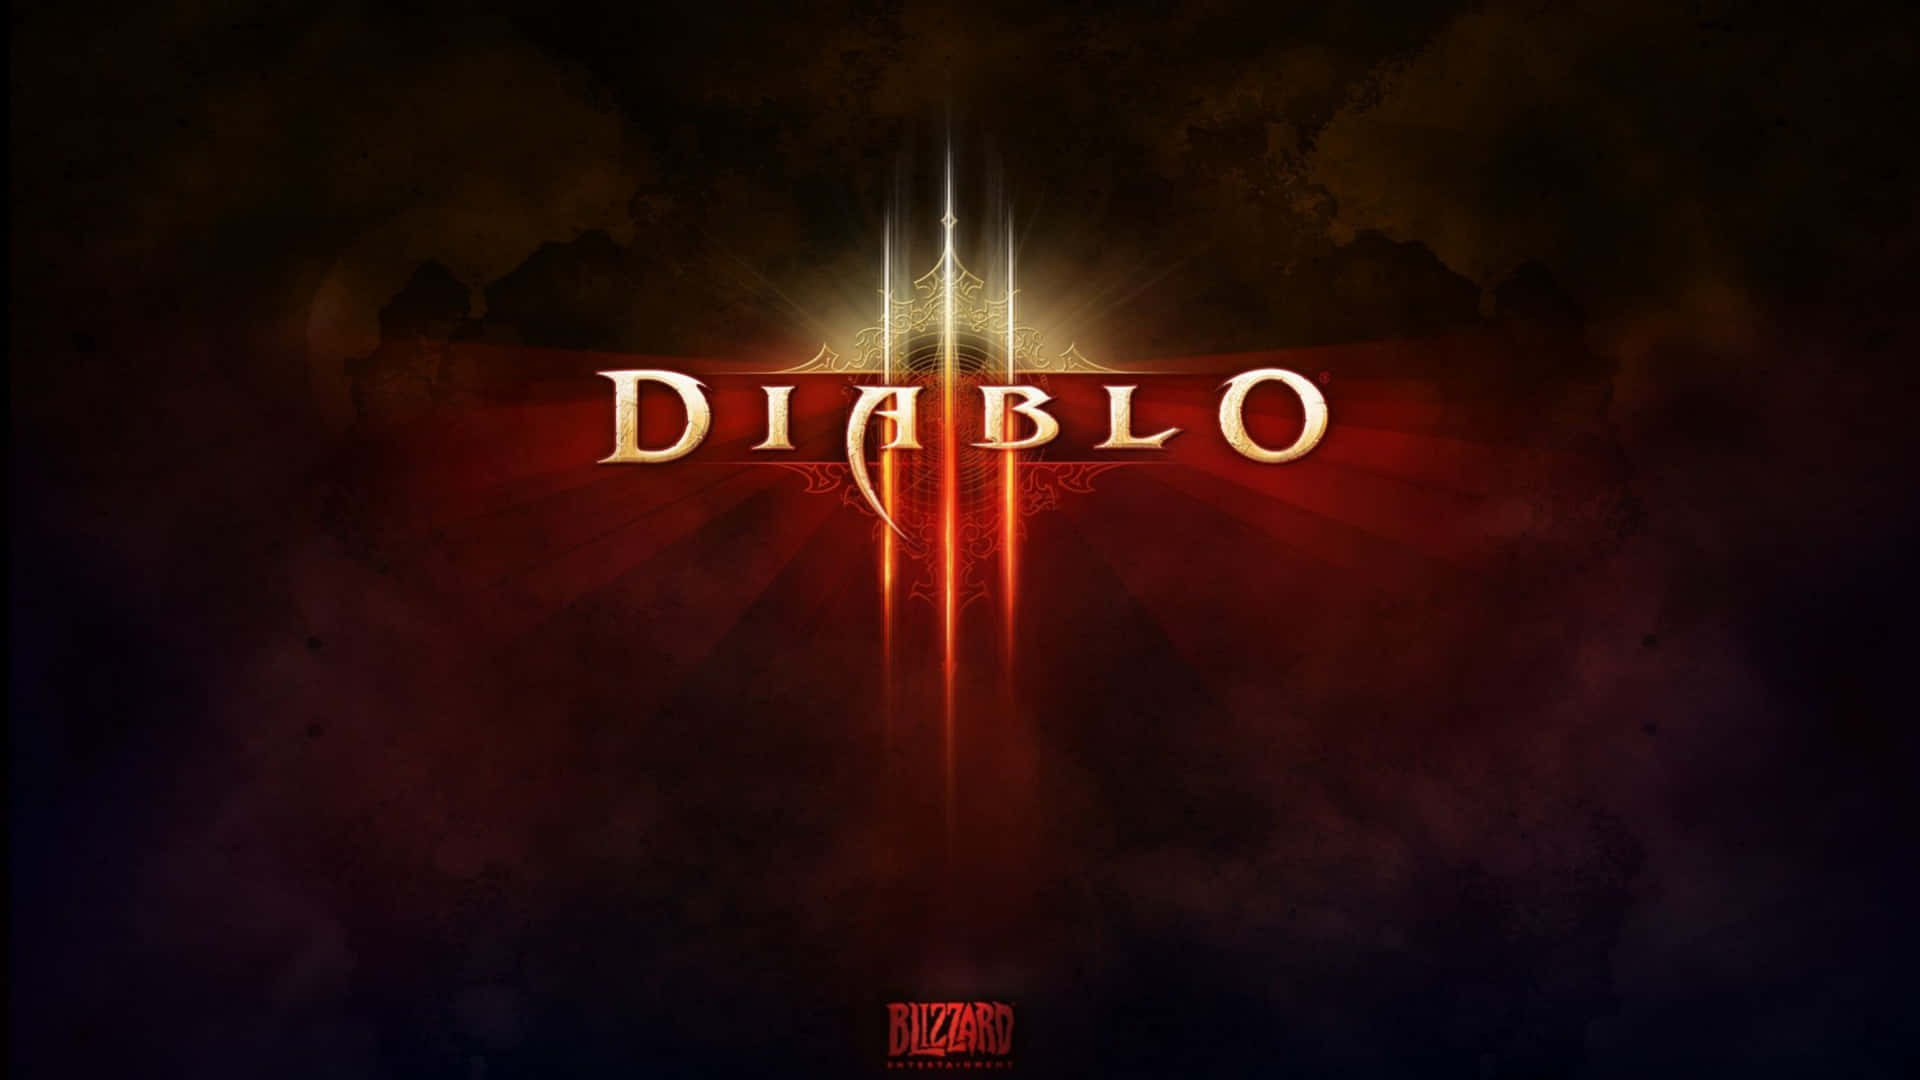 Erövraunderjorden I Stil Med Blizzard's Diablo 4k På Din Datorskärm Eller Mobila Bakgrundsbild. Wallpaper